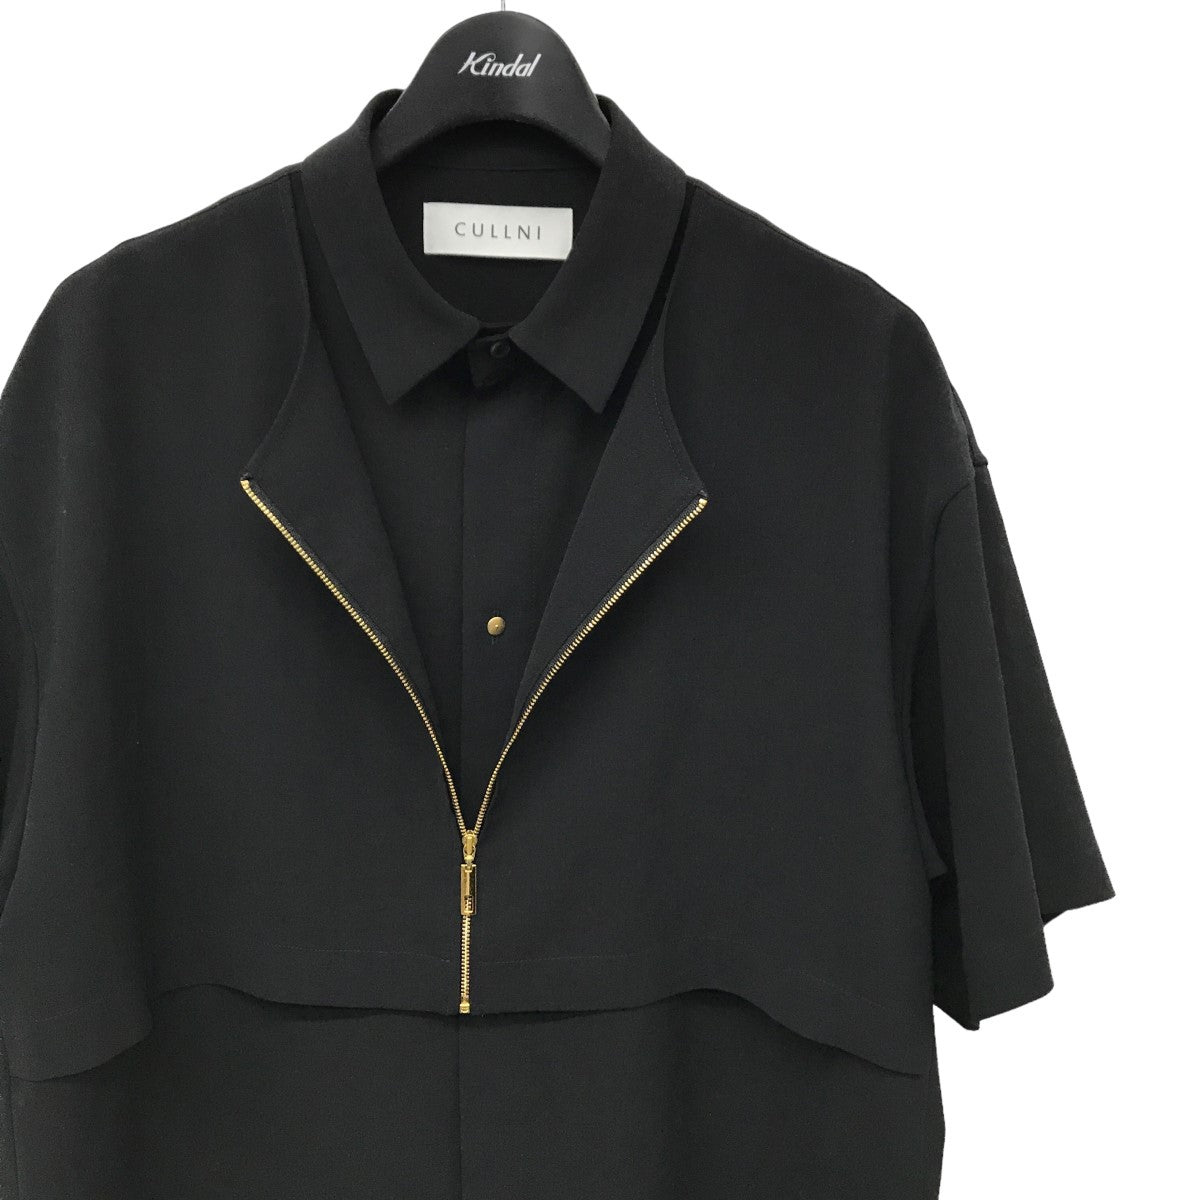 CULLNI(クルニ) Front Zip Layered Short Sleeve Shirt 半袖シャツ 23-SS-029